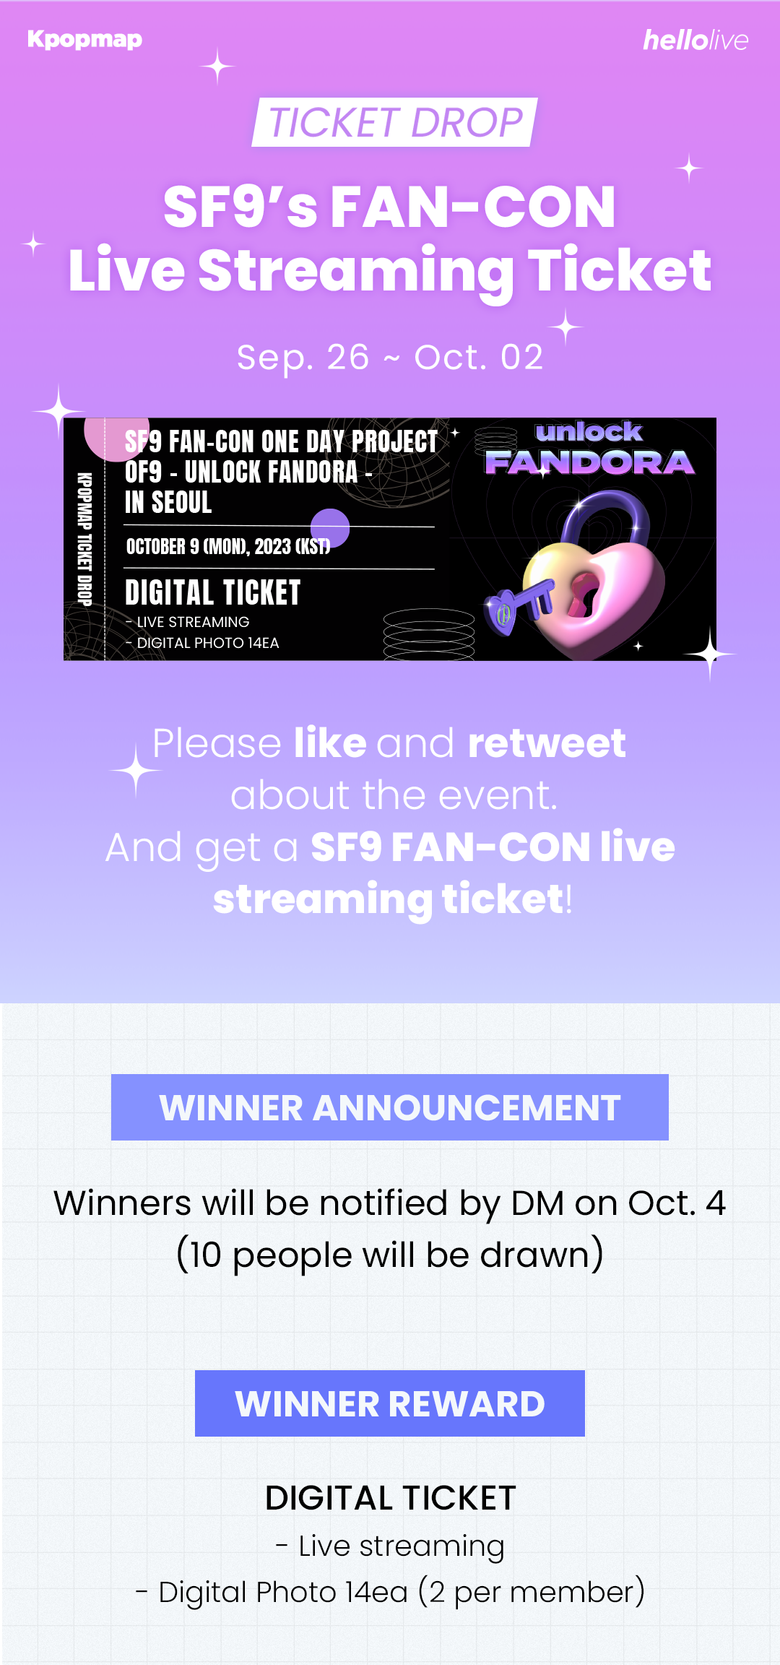 [TICKET DROP] Get a SF9's FAN-CON Live Streaming Ticket